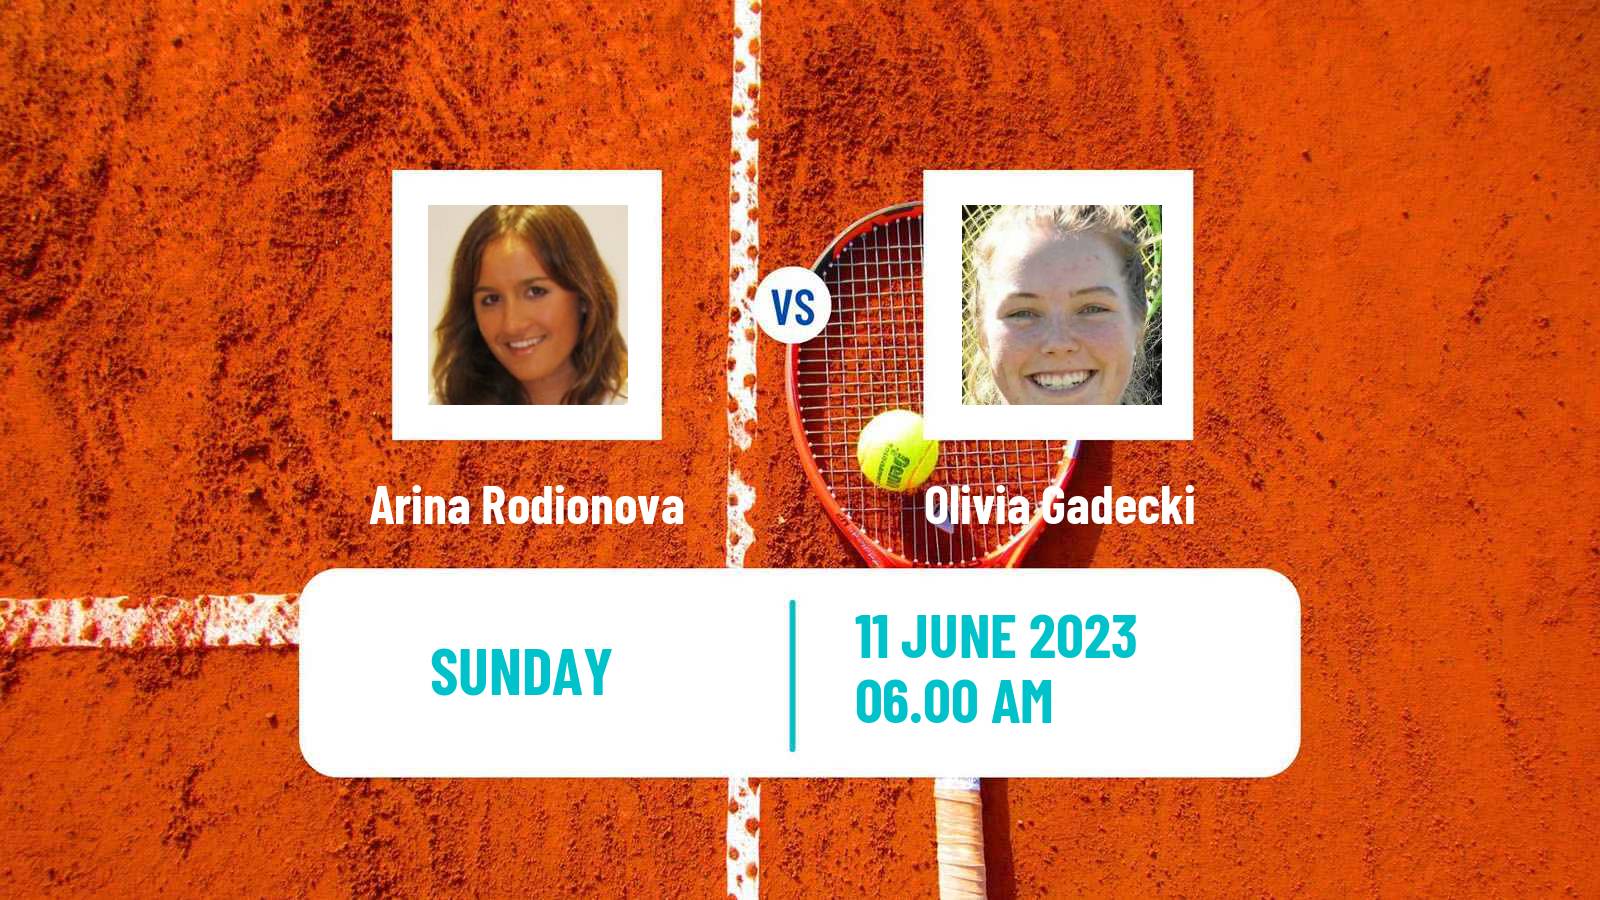 Tennis WTA Nottingham Arina Rodionova - Olivia Gadecki